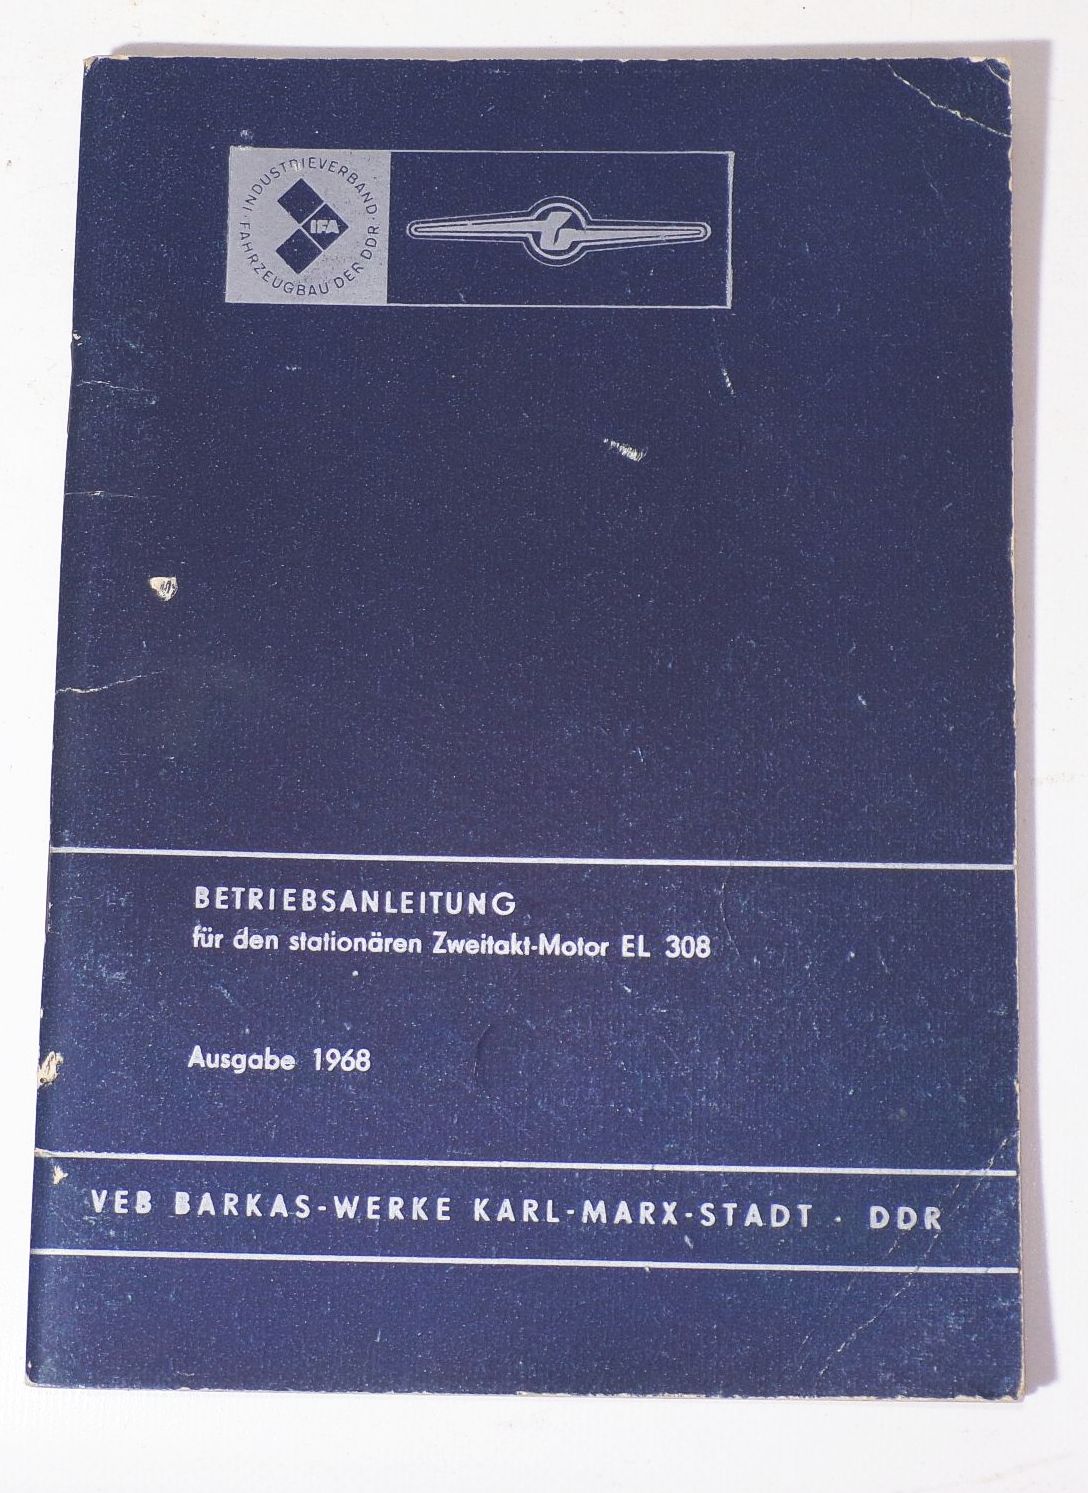 Betriebsanleitung stationärer Zweitakt Motor EL308 Ausgabe 1968